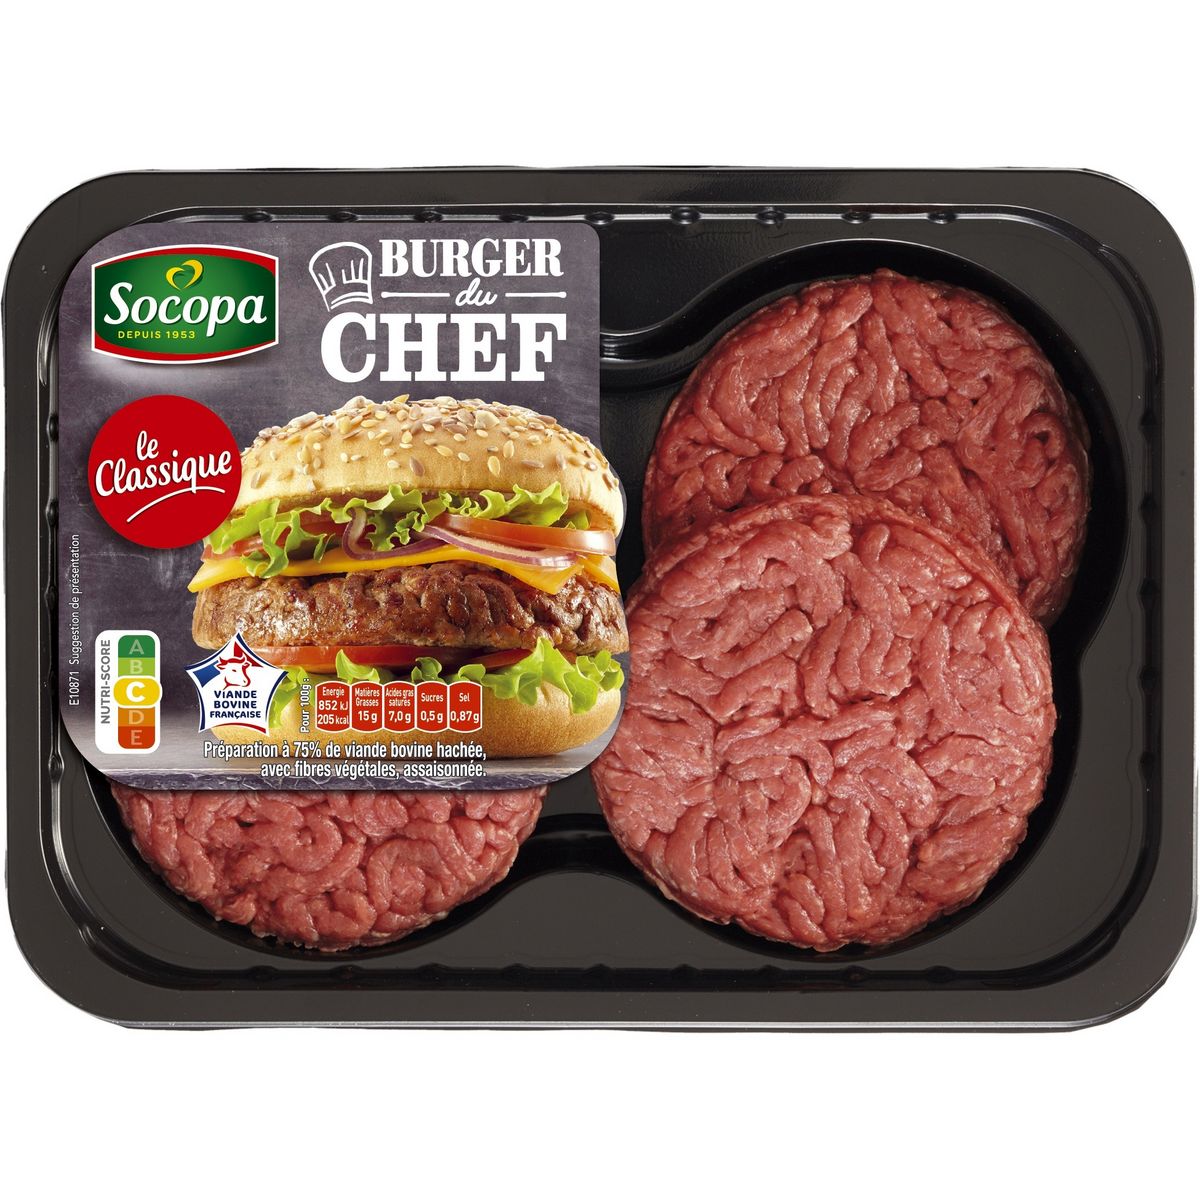 SOCOPA Hâché spécial Burger du chef 15%mg 4 pièces 440g